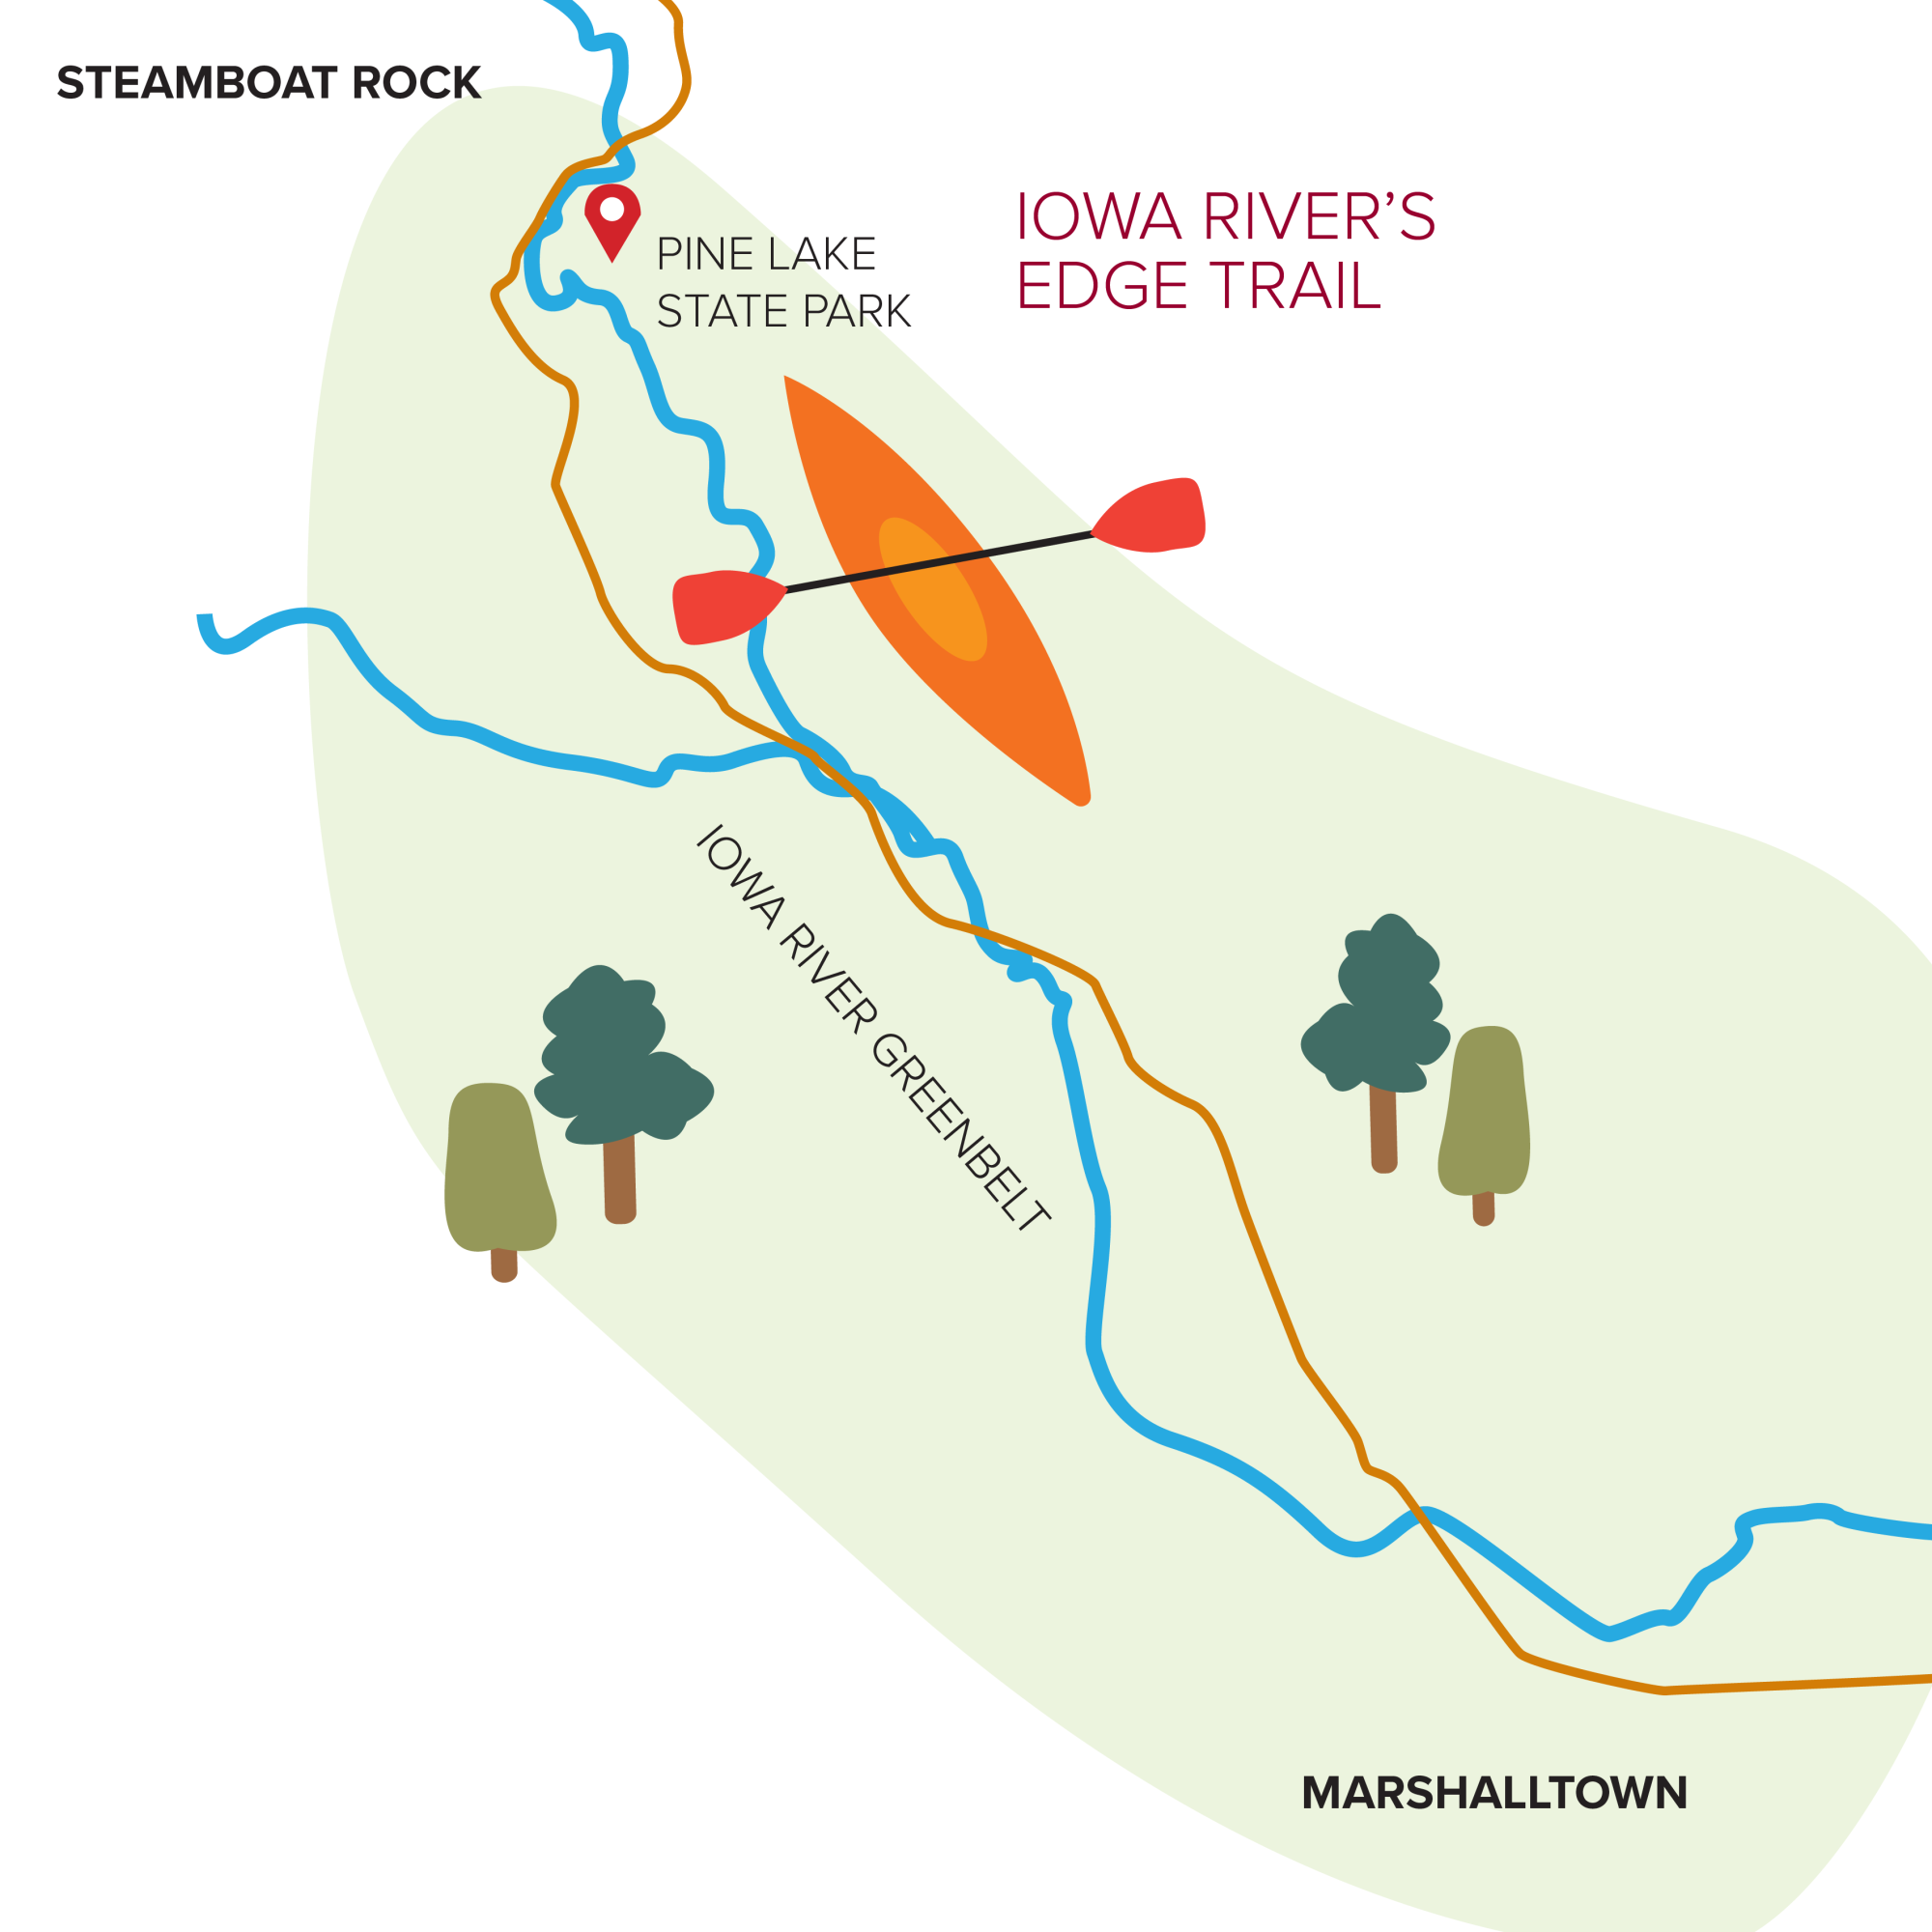 Iowa River's Edge Trail